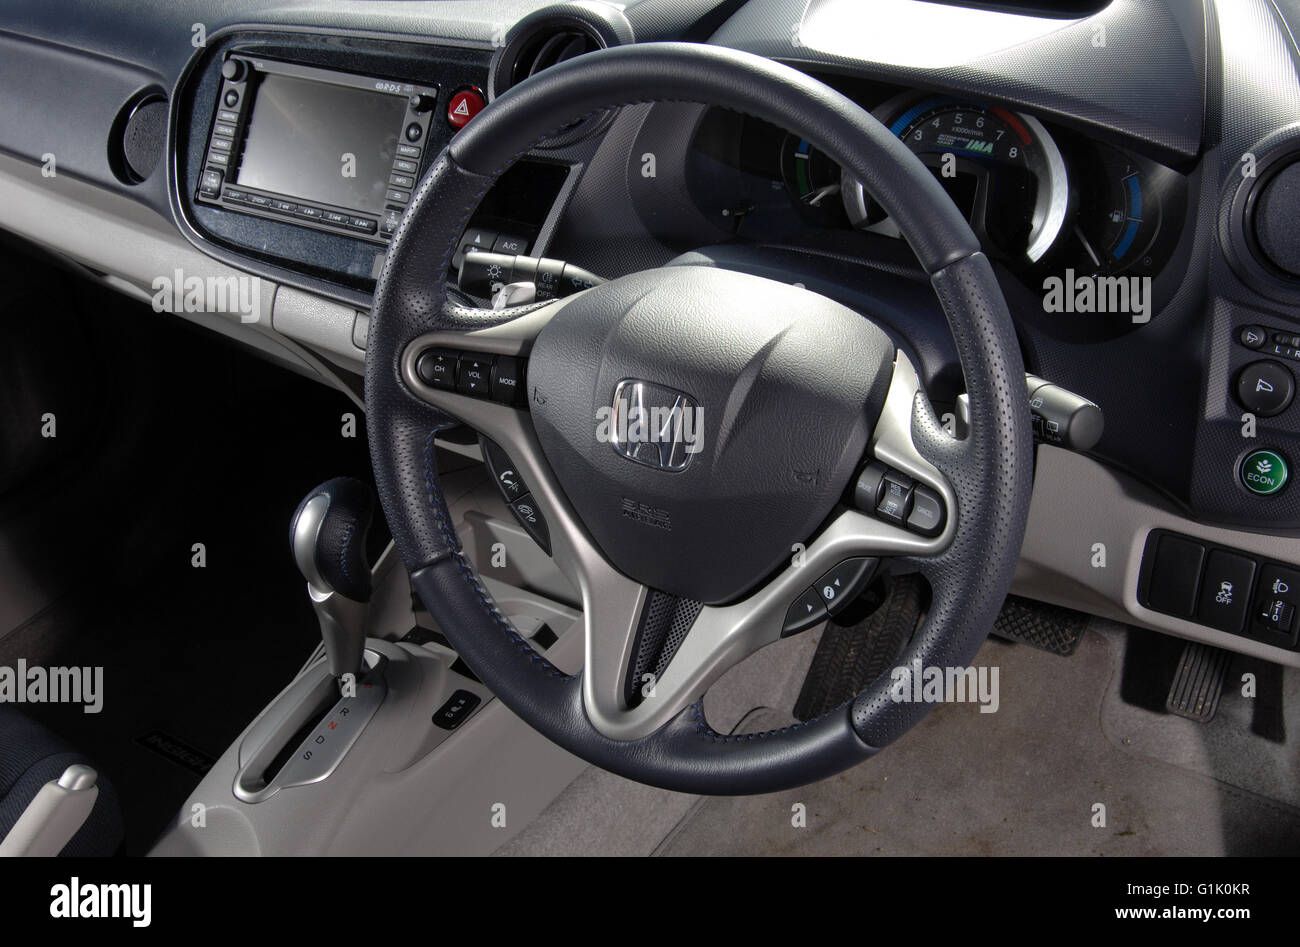 2009 Honda Insight hybrid family hatchback car dashboard Stock Photo